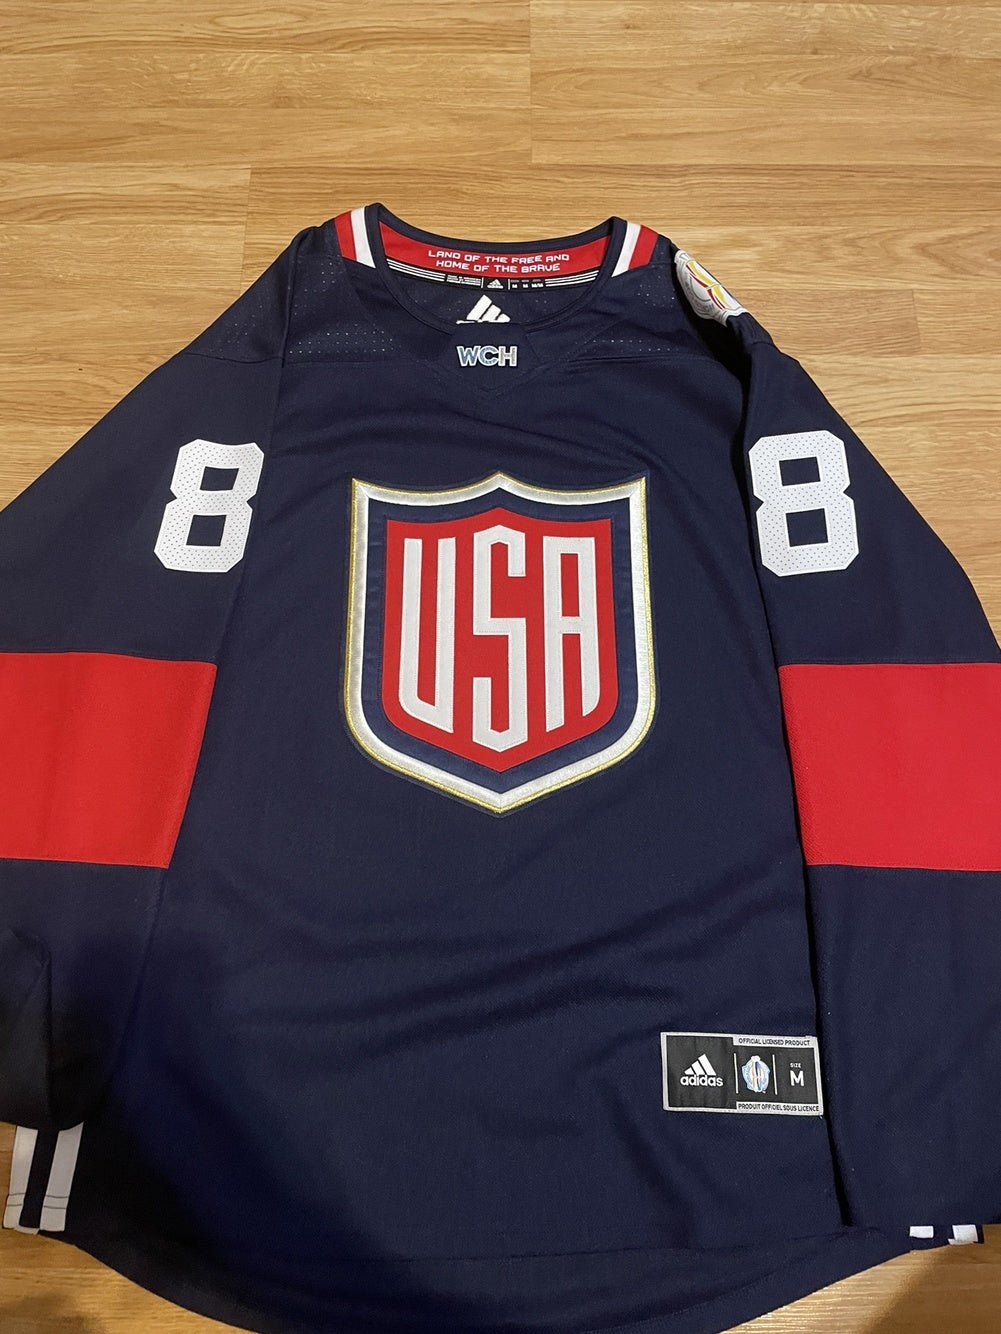 2014 Olympic Team USA No.88 Patrick Kane Navy Blue Hockey Jersey